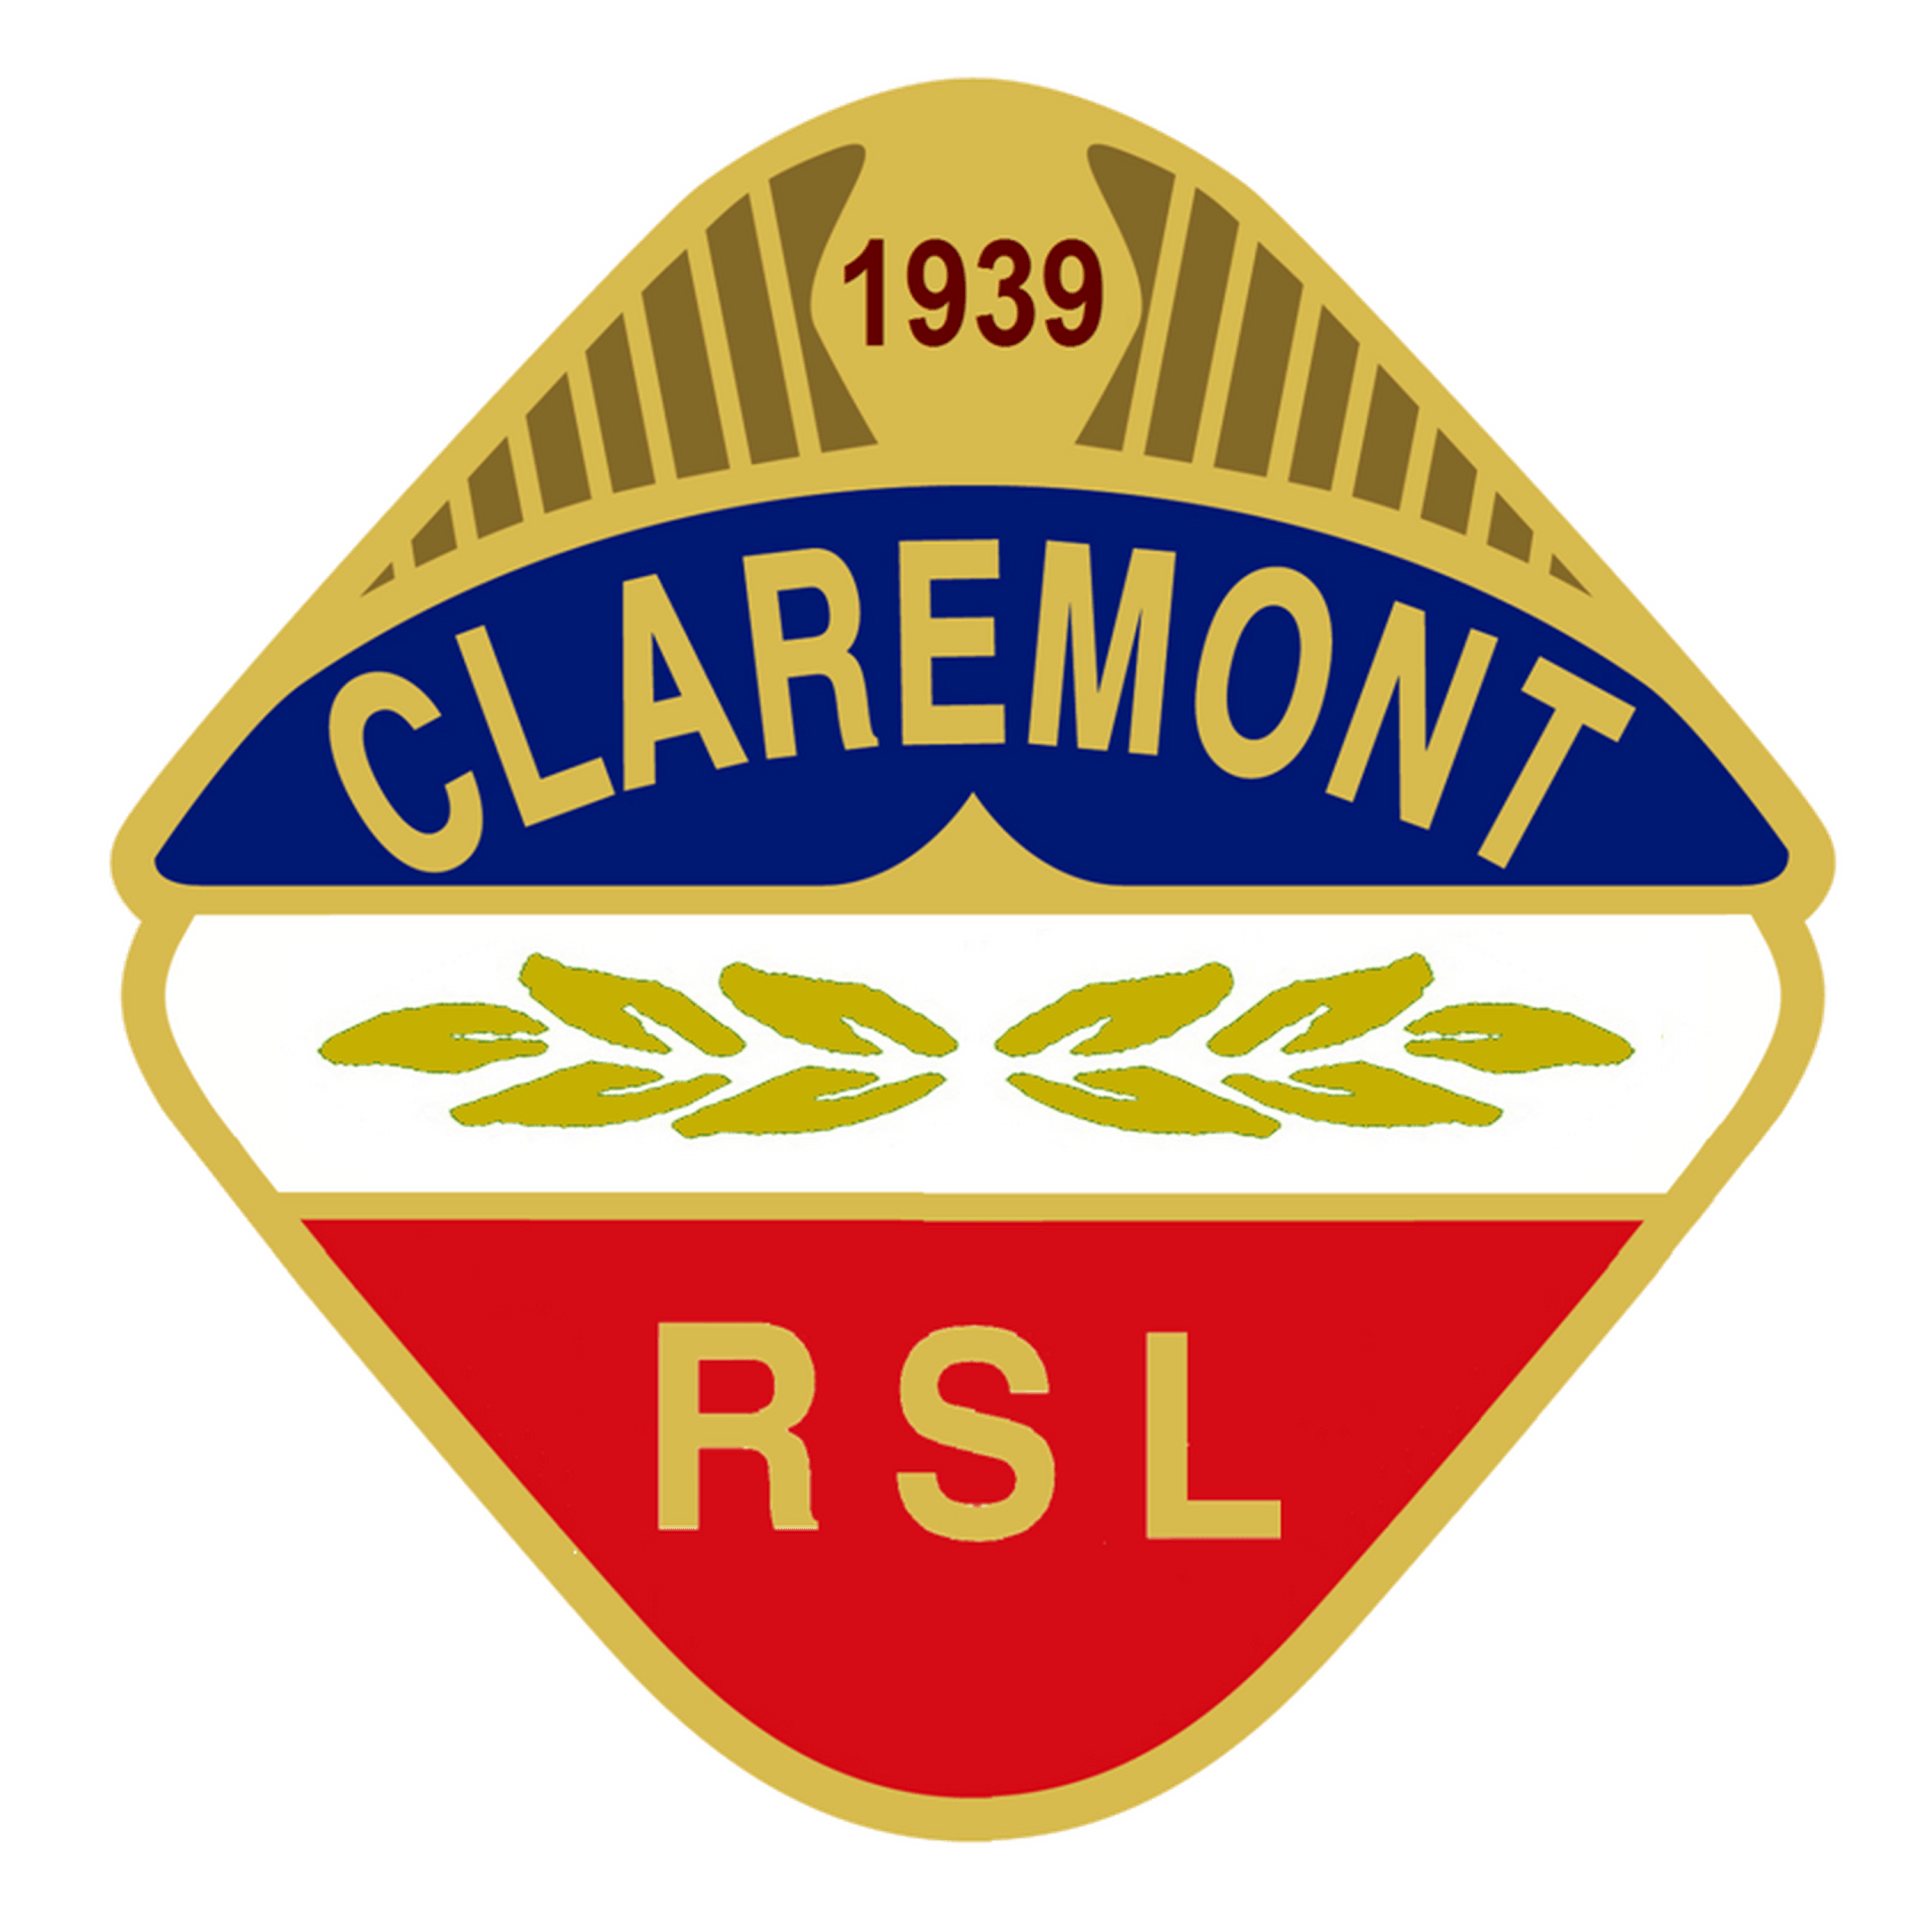 commemorative-events-claremont-rsl